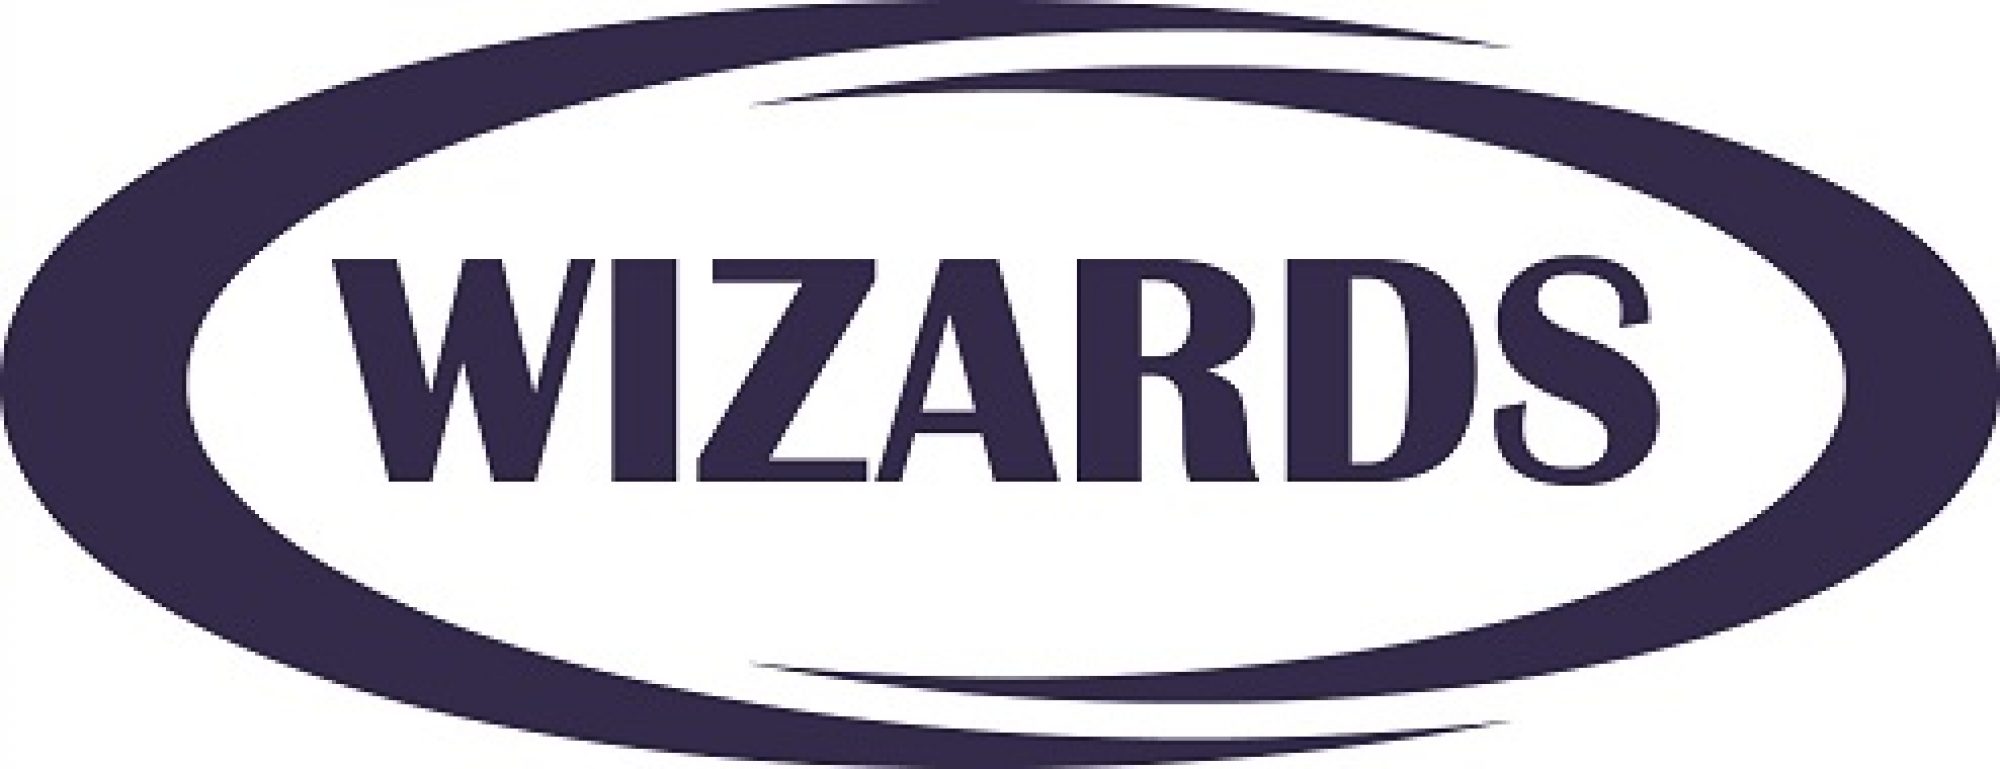 Wizards Ltd